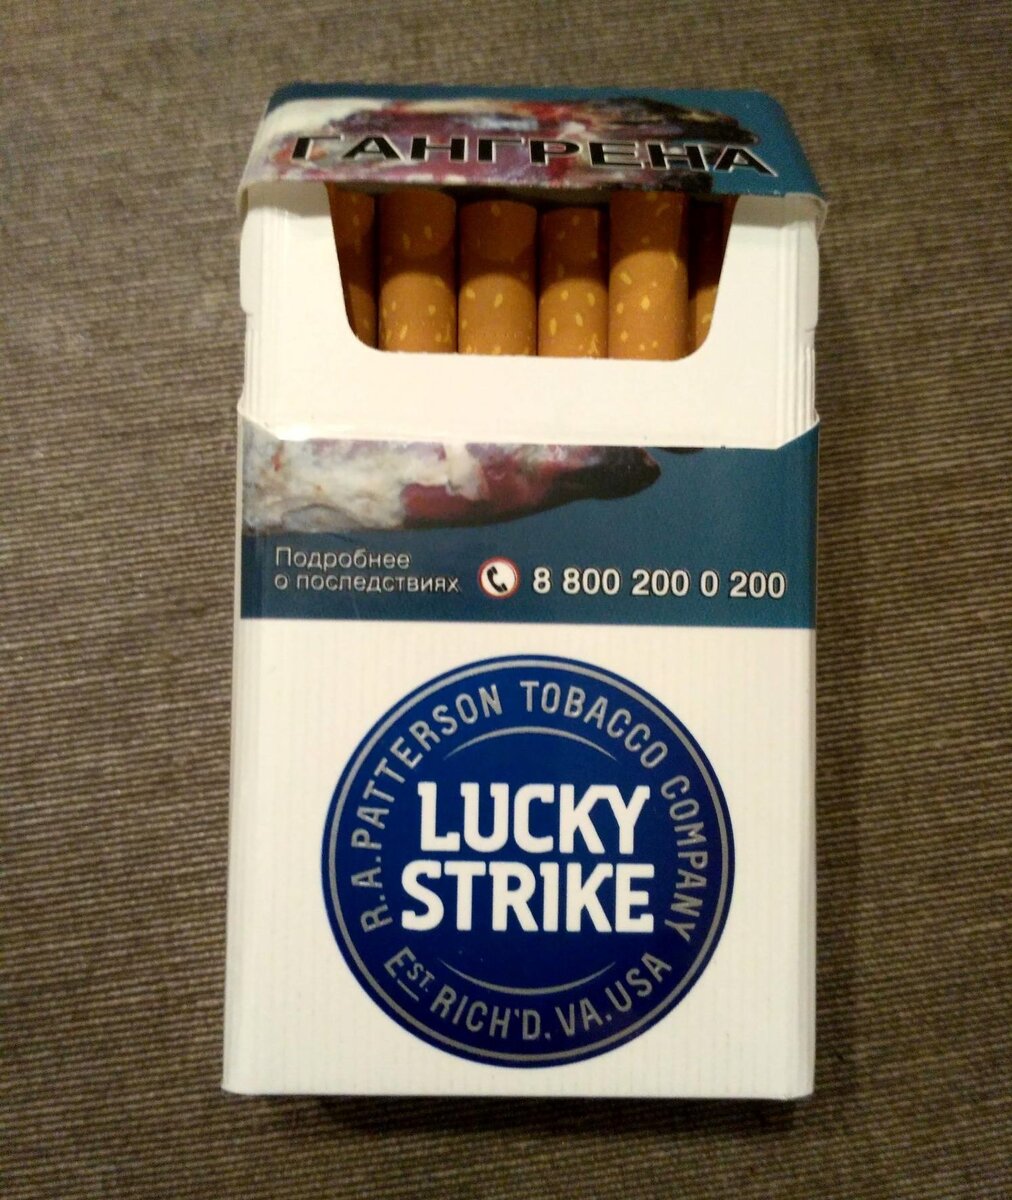 Лайки страйки компакт. Сигареты лайки Strike компакт Блю. Сигареты Lucky Strike Compact Blue. Лаки страйк премиум Блю. Сигареты лайки страйк премиум Блю.